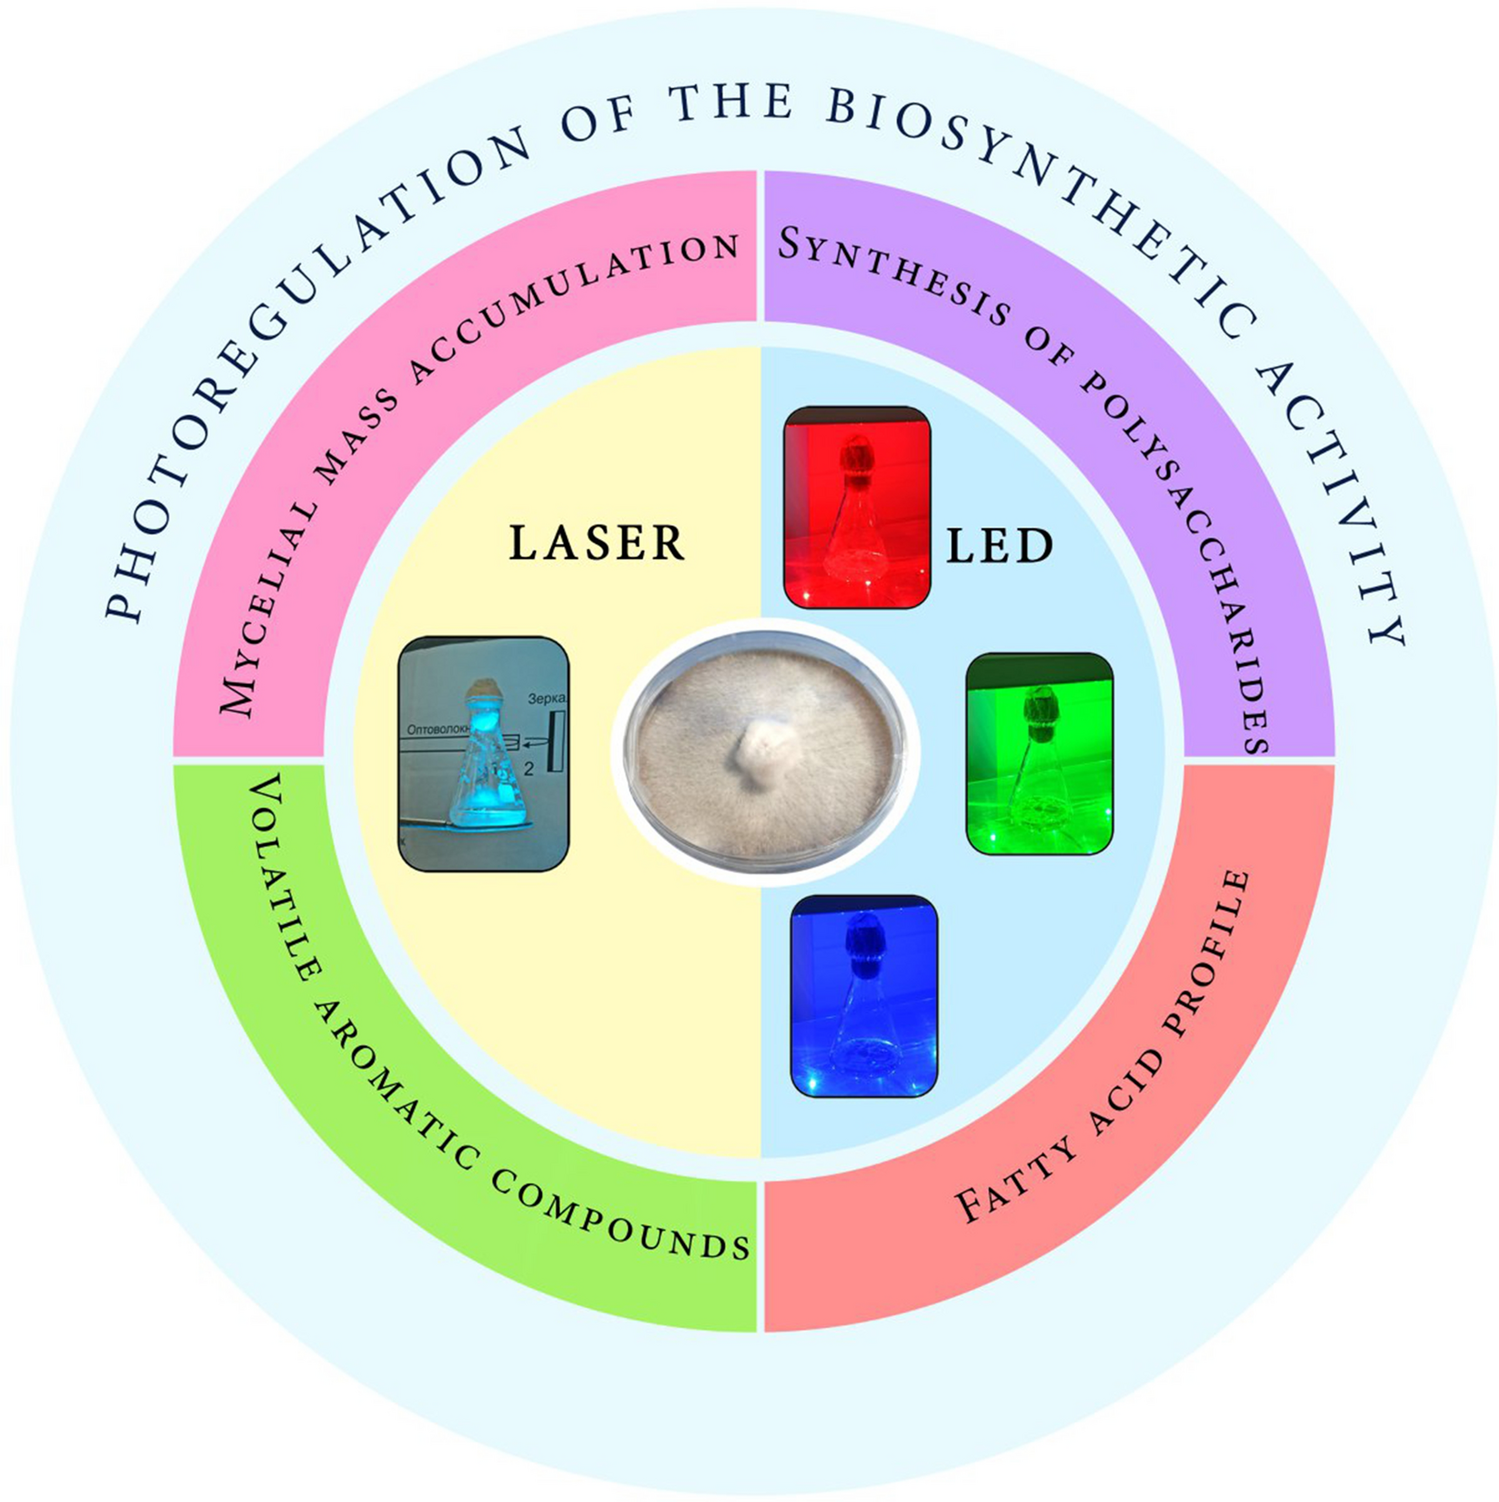 Photoregulation of the biosynthetic activity of the edible medicinal mushroom Lentinula edodes in vitro